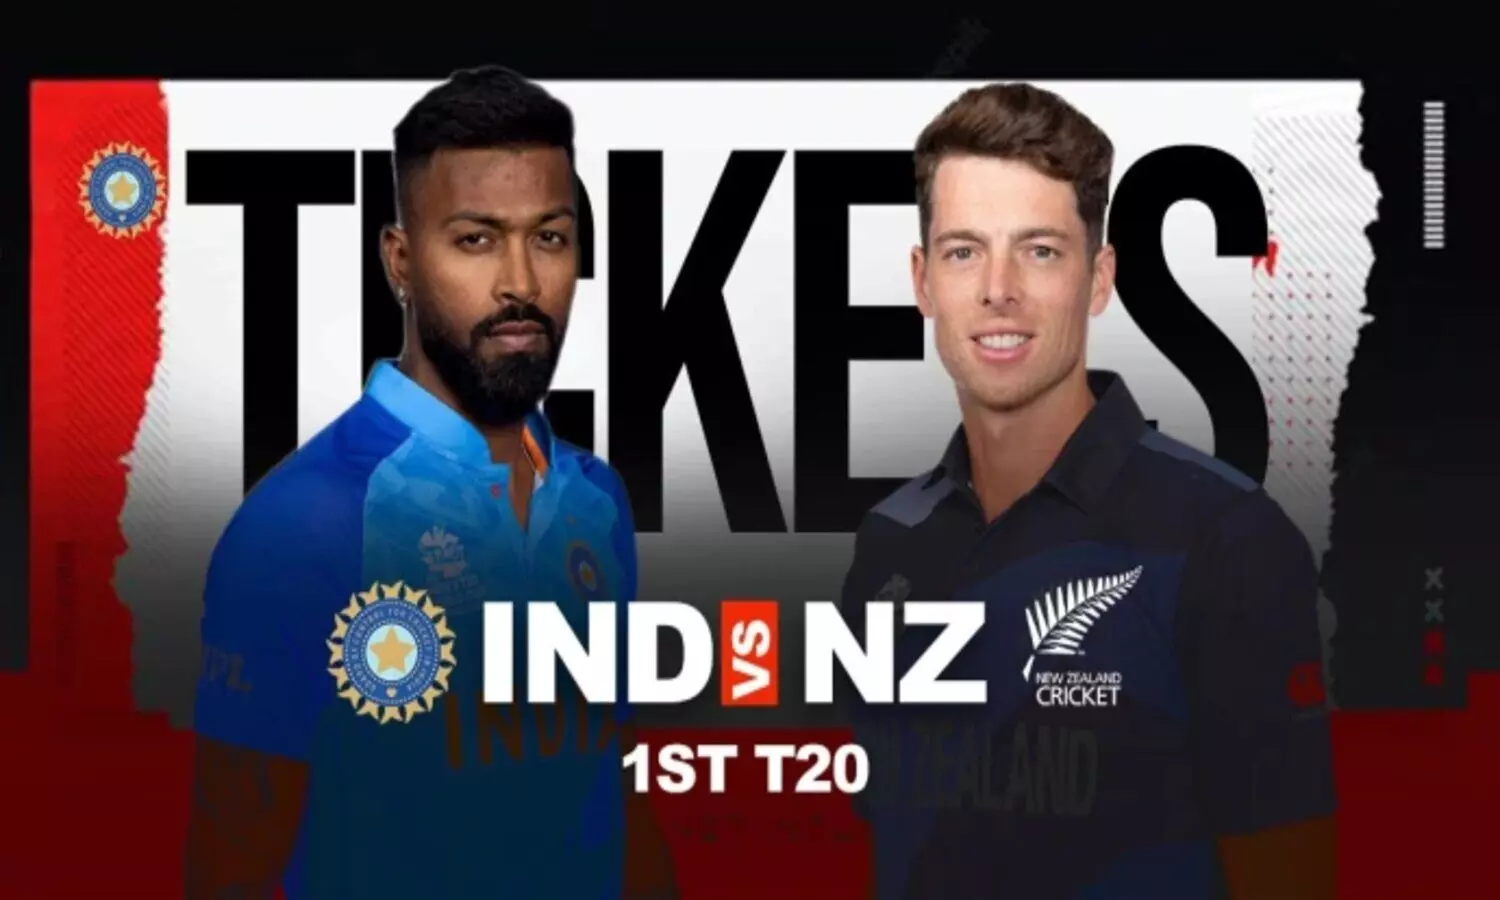 IND vs NZ T20: